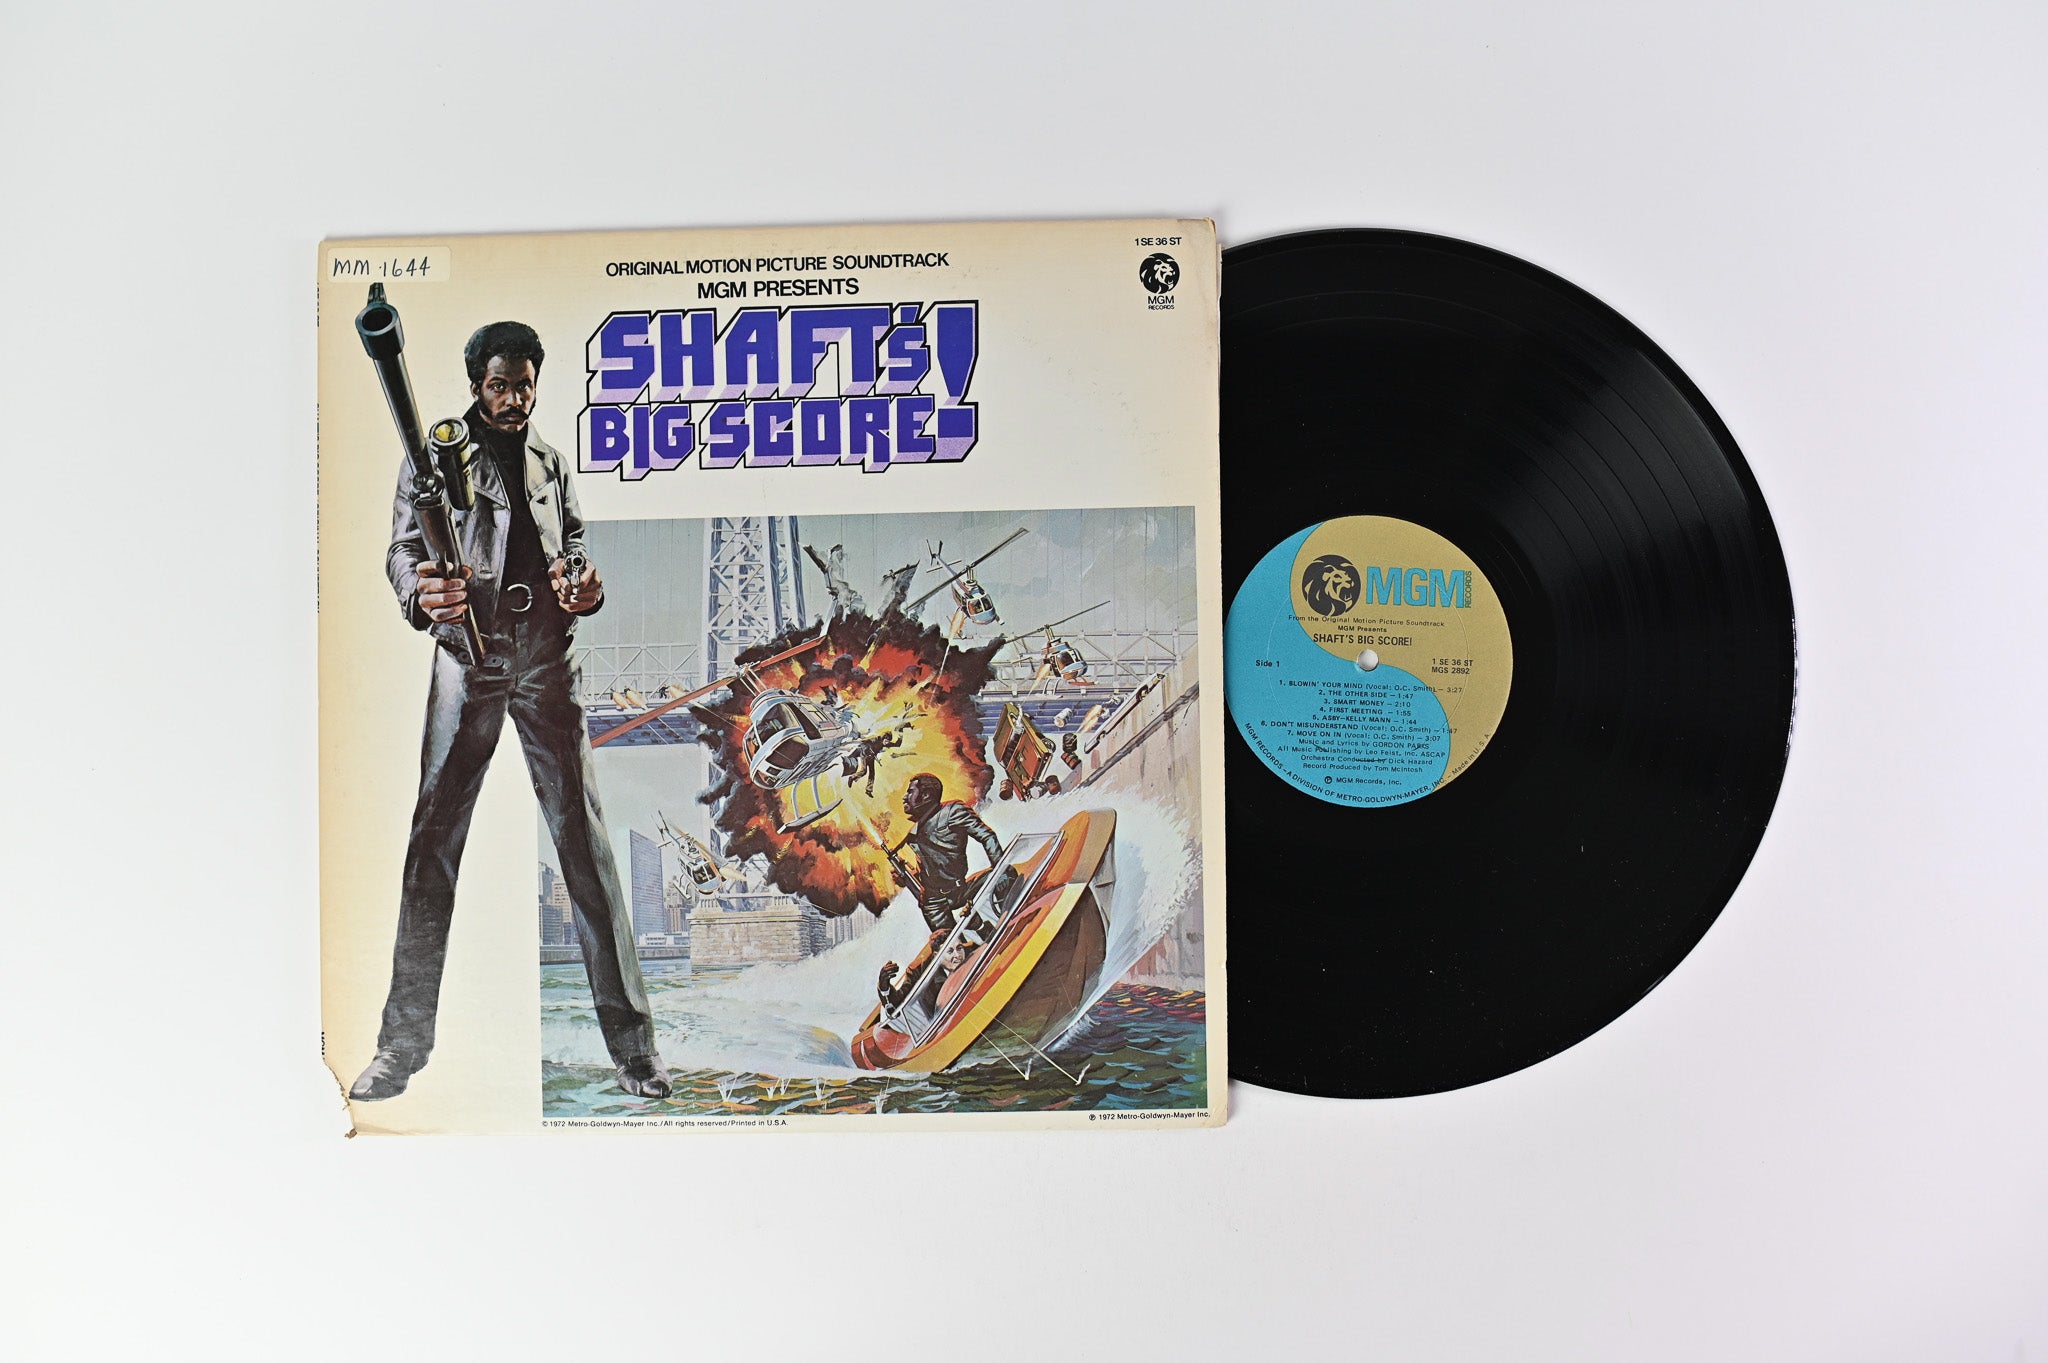 Gordon Parks - Shaft's Big Score! - The Original Motion Picture Soundtrack on MGM Records